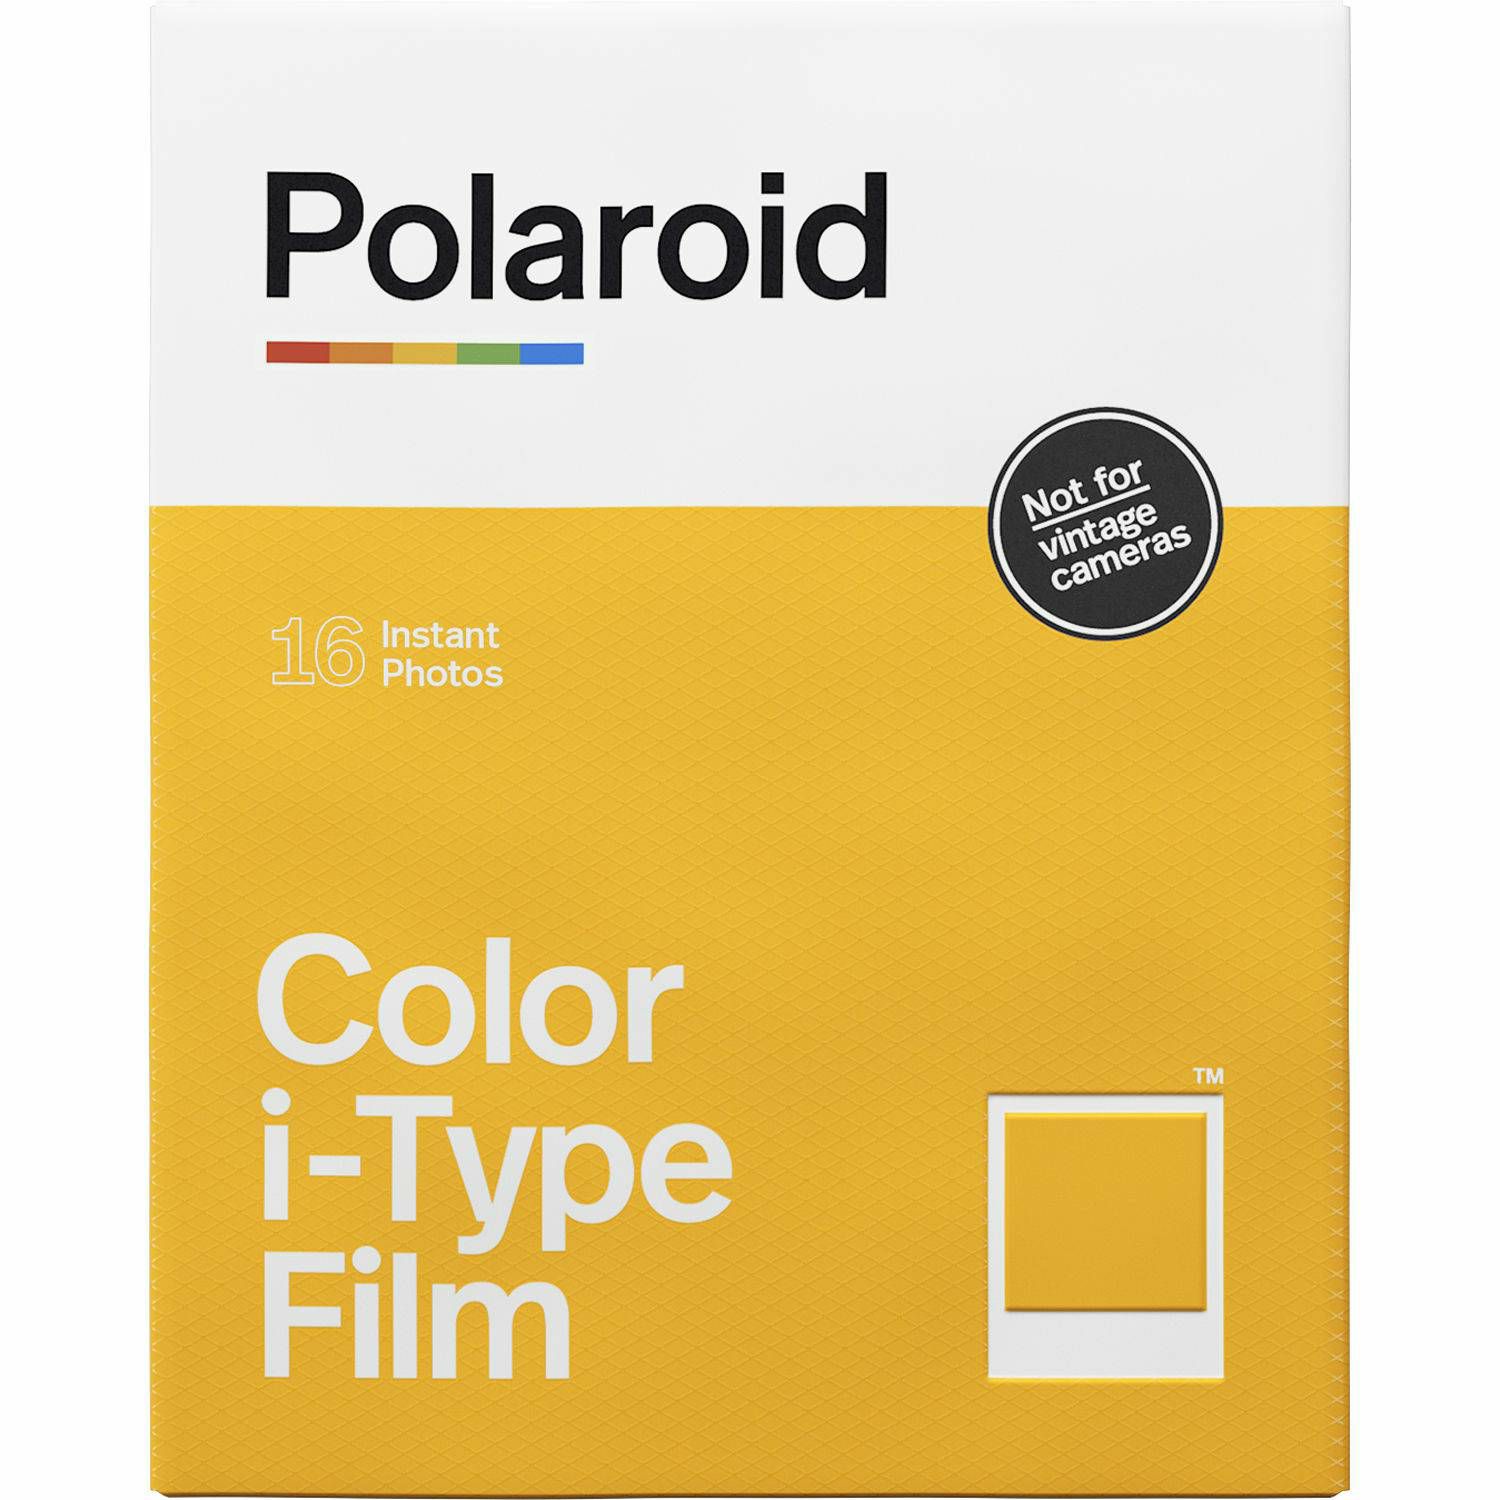 Polaroid Originals Color Film for i-Type Double Pack foto papir za fotografije u boji za Instant fotoaparate (006009)